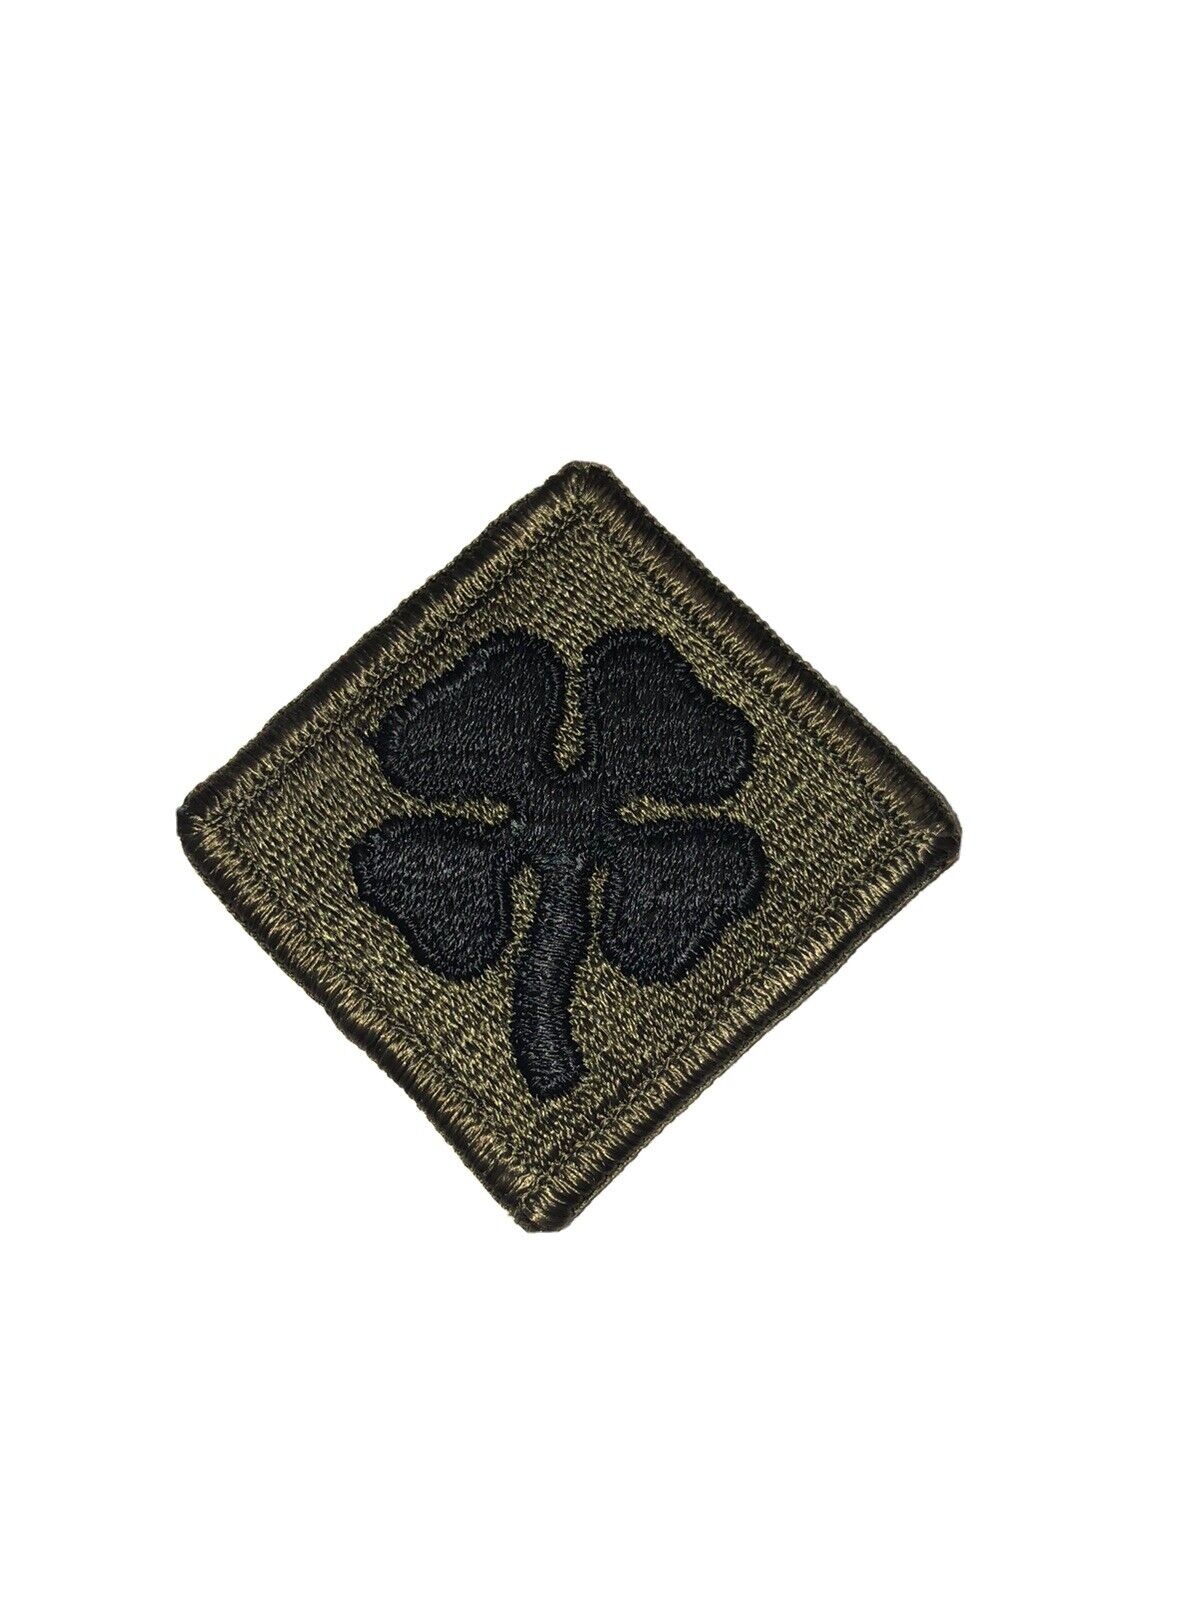 4th Army Subdued U.S. Army Shoulder Patch Insignia